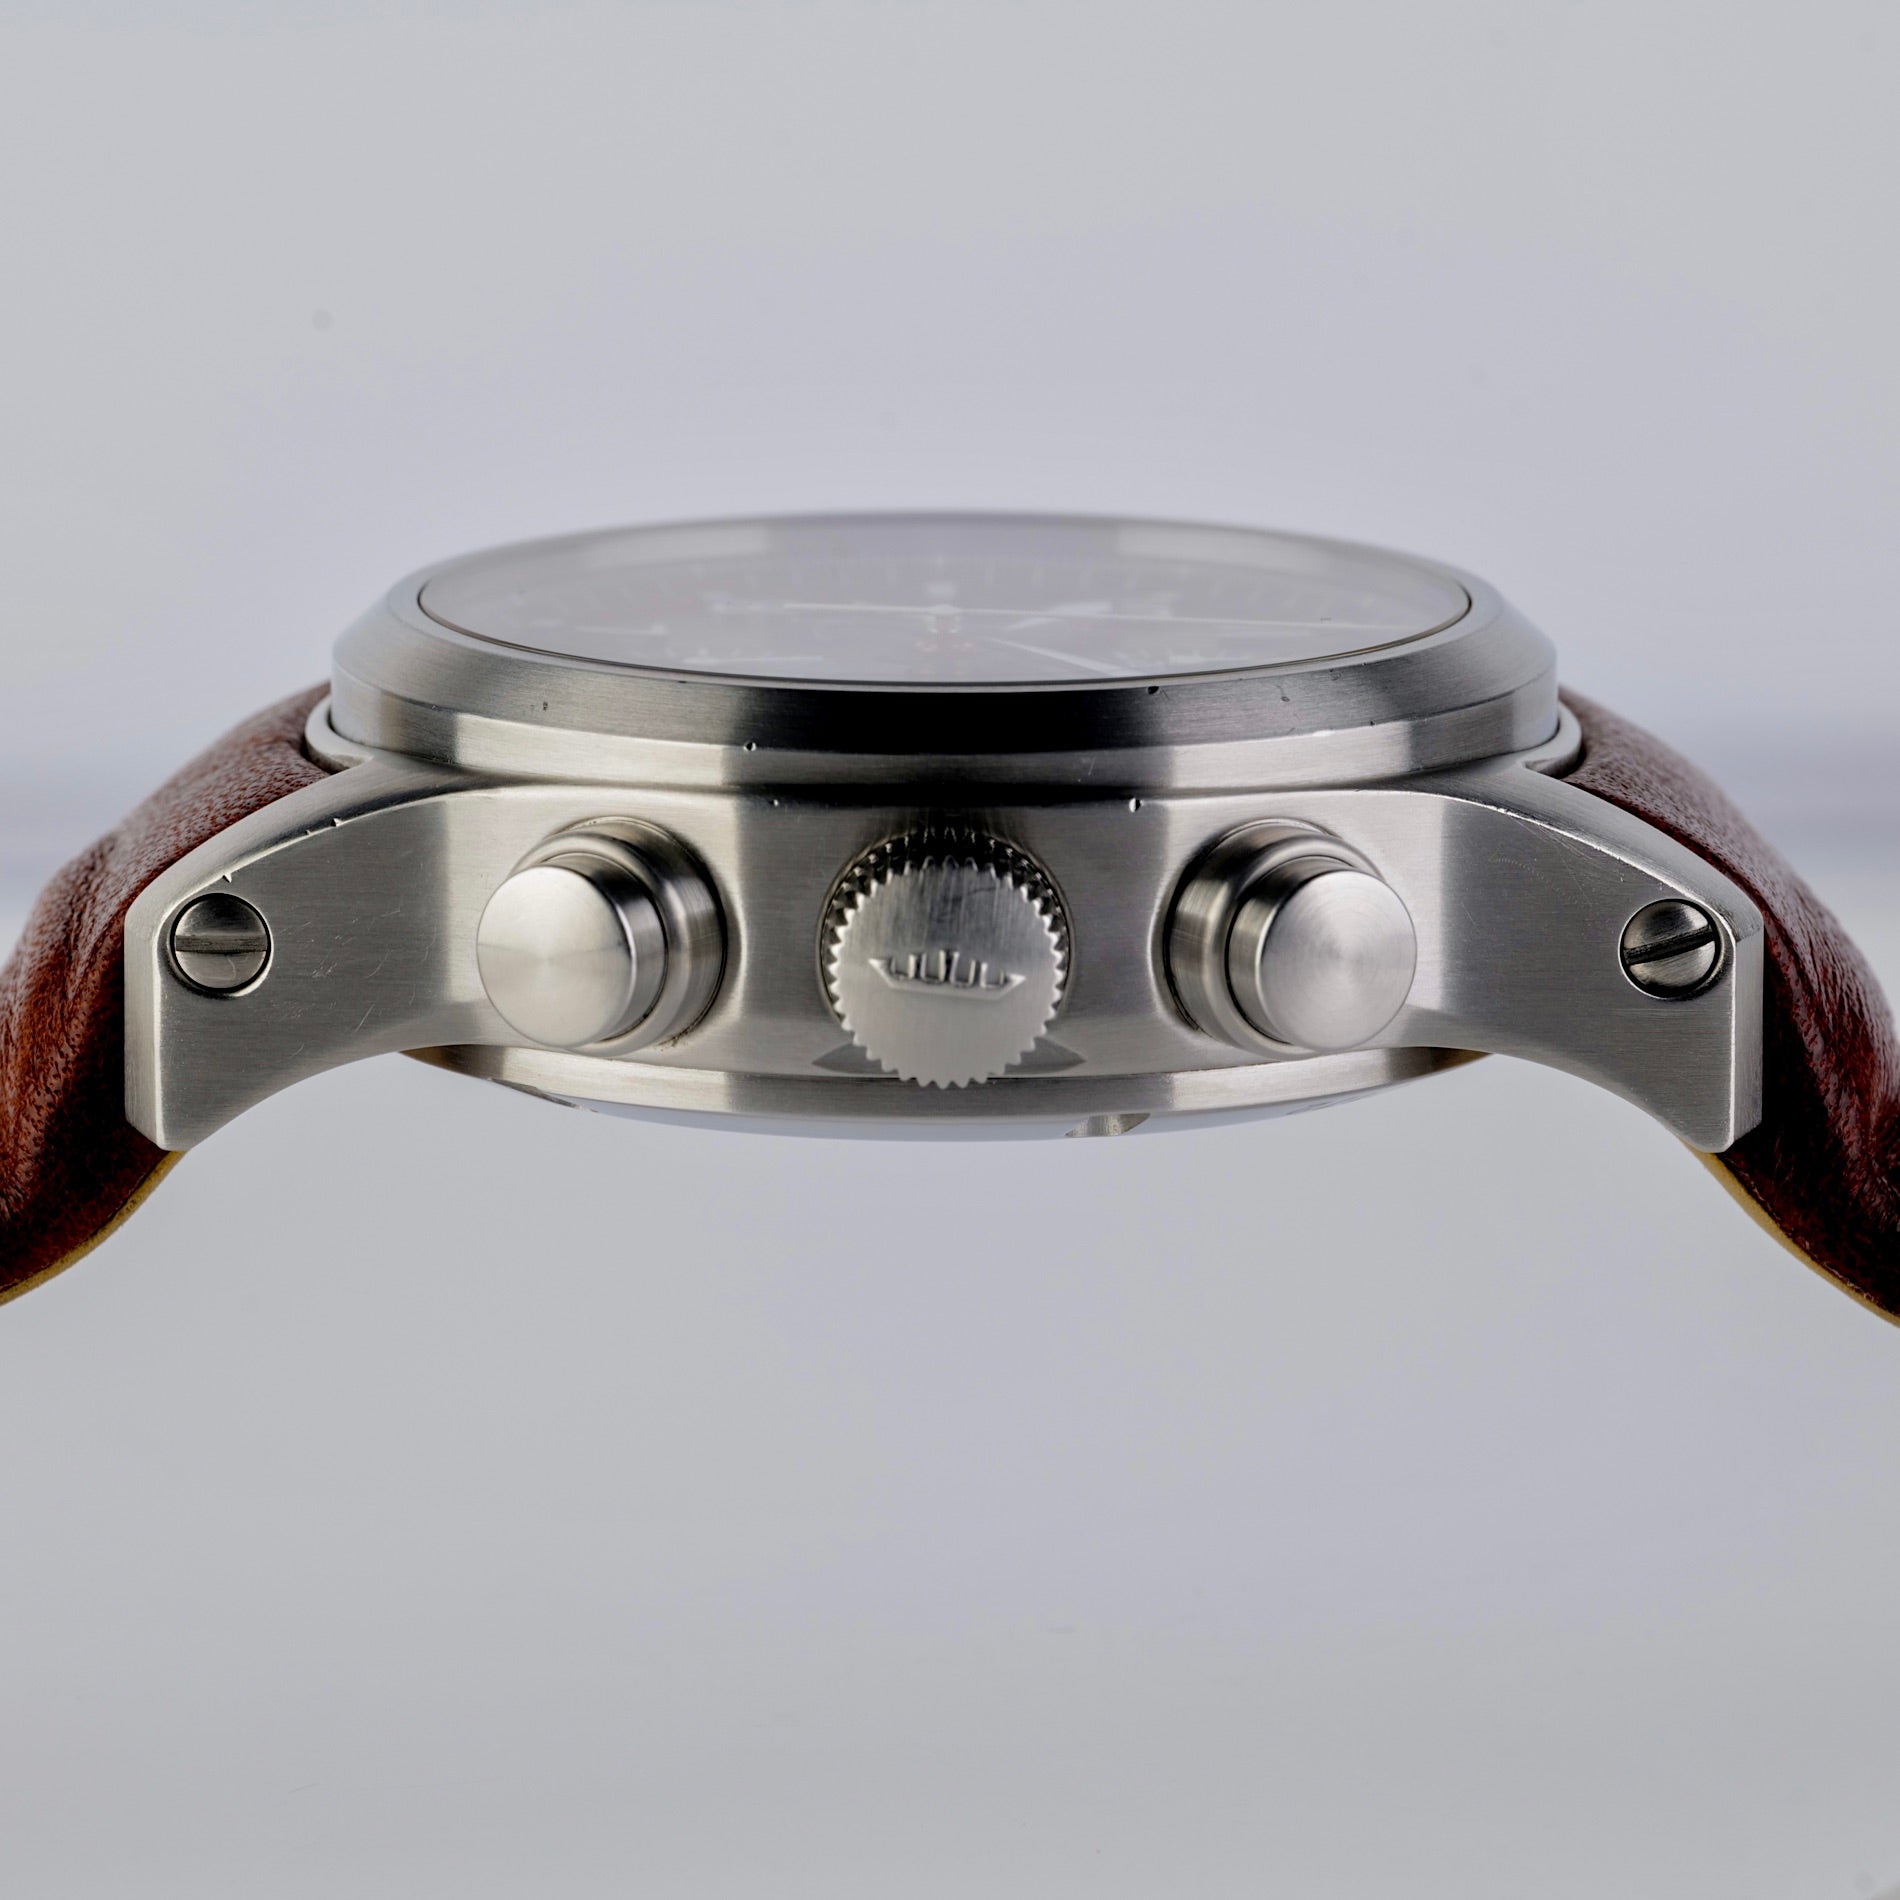 Fortis Aeromaster Men's Watch Model: F4040004